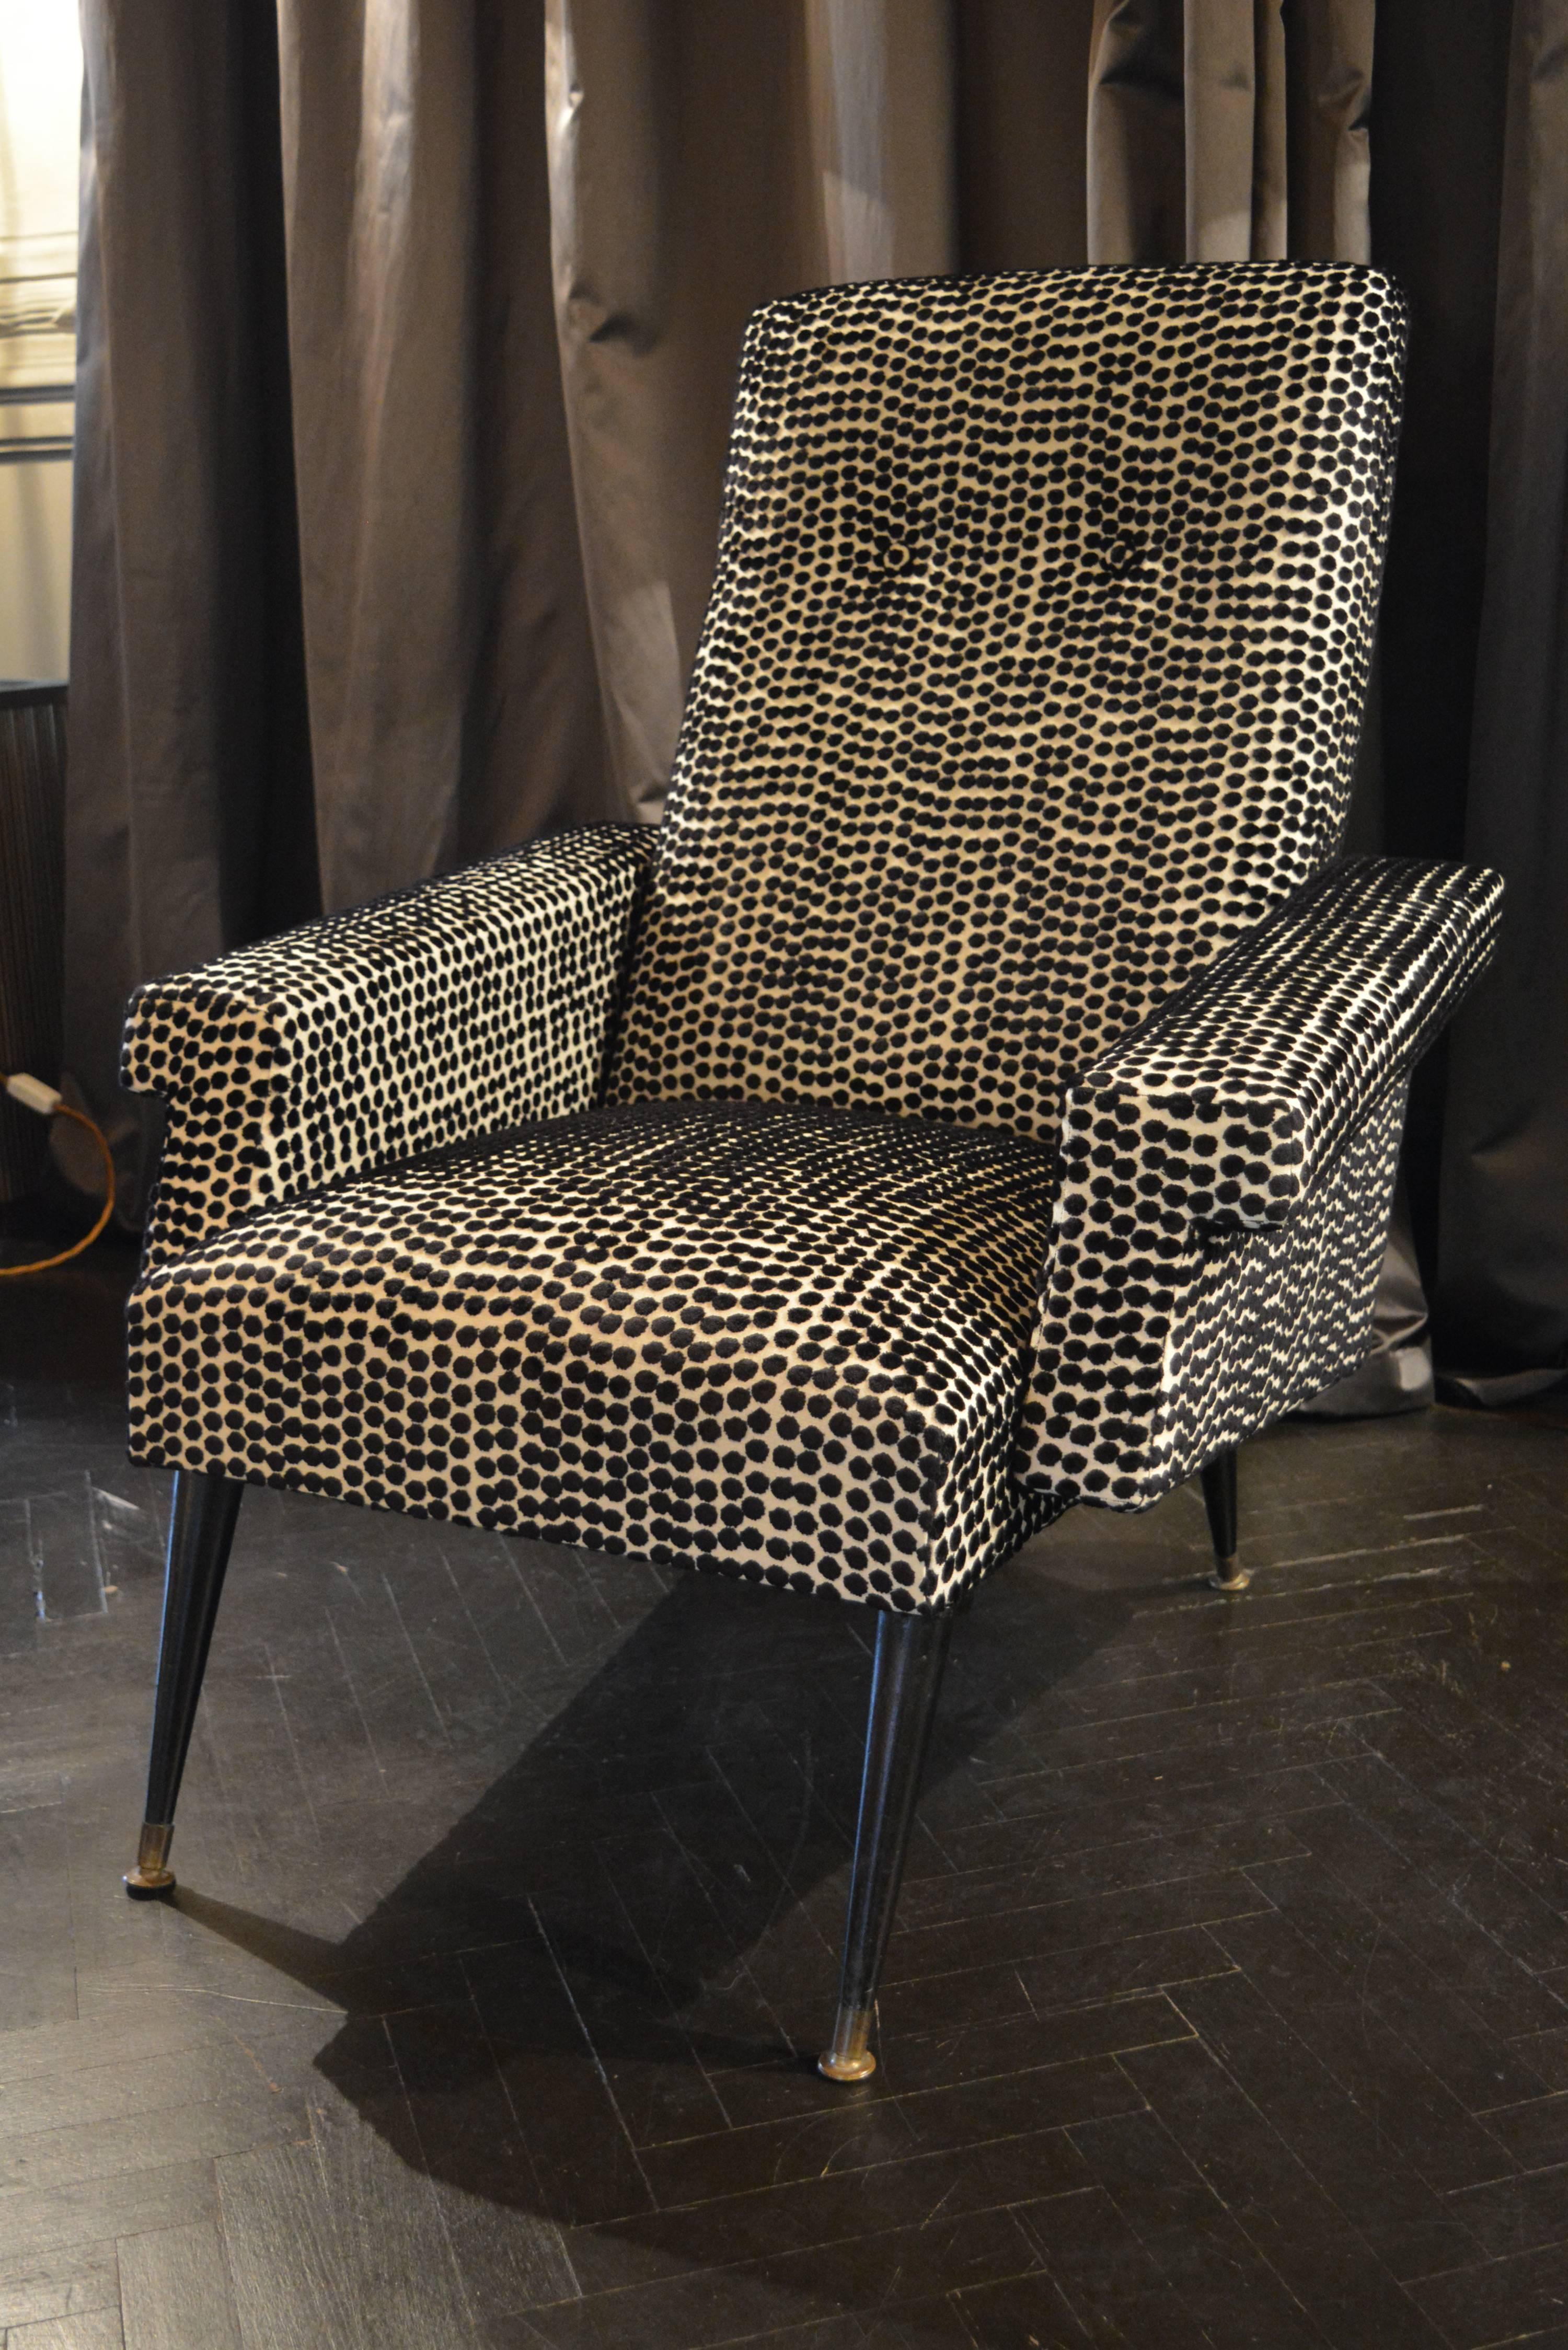 Newly reupholstered in black and white velvet polka dot, blackwood feets with brass details.